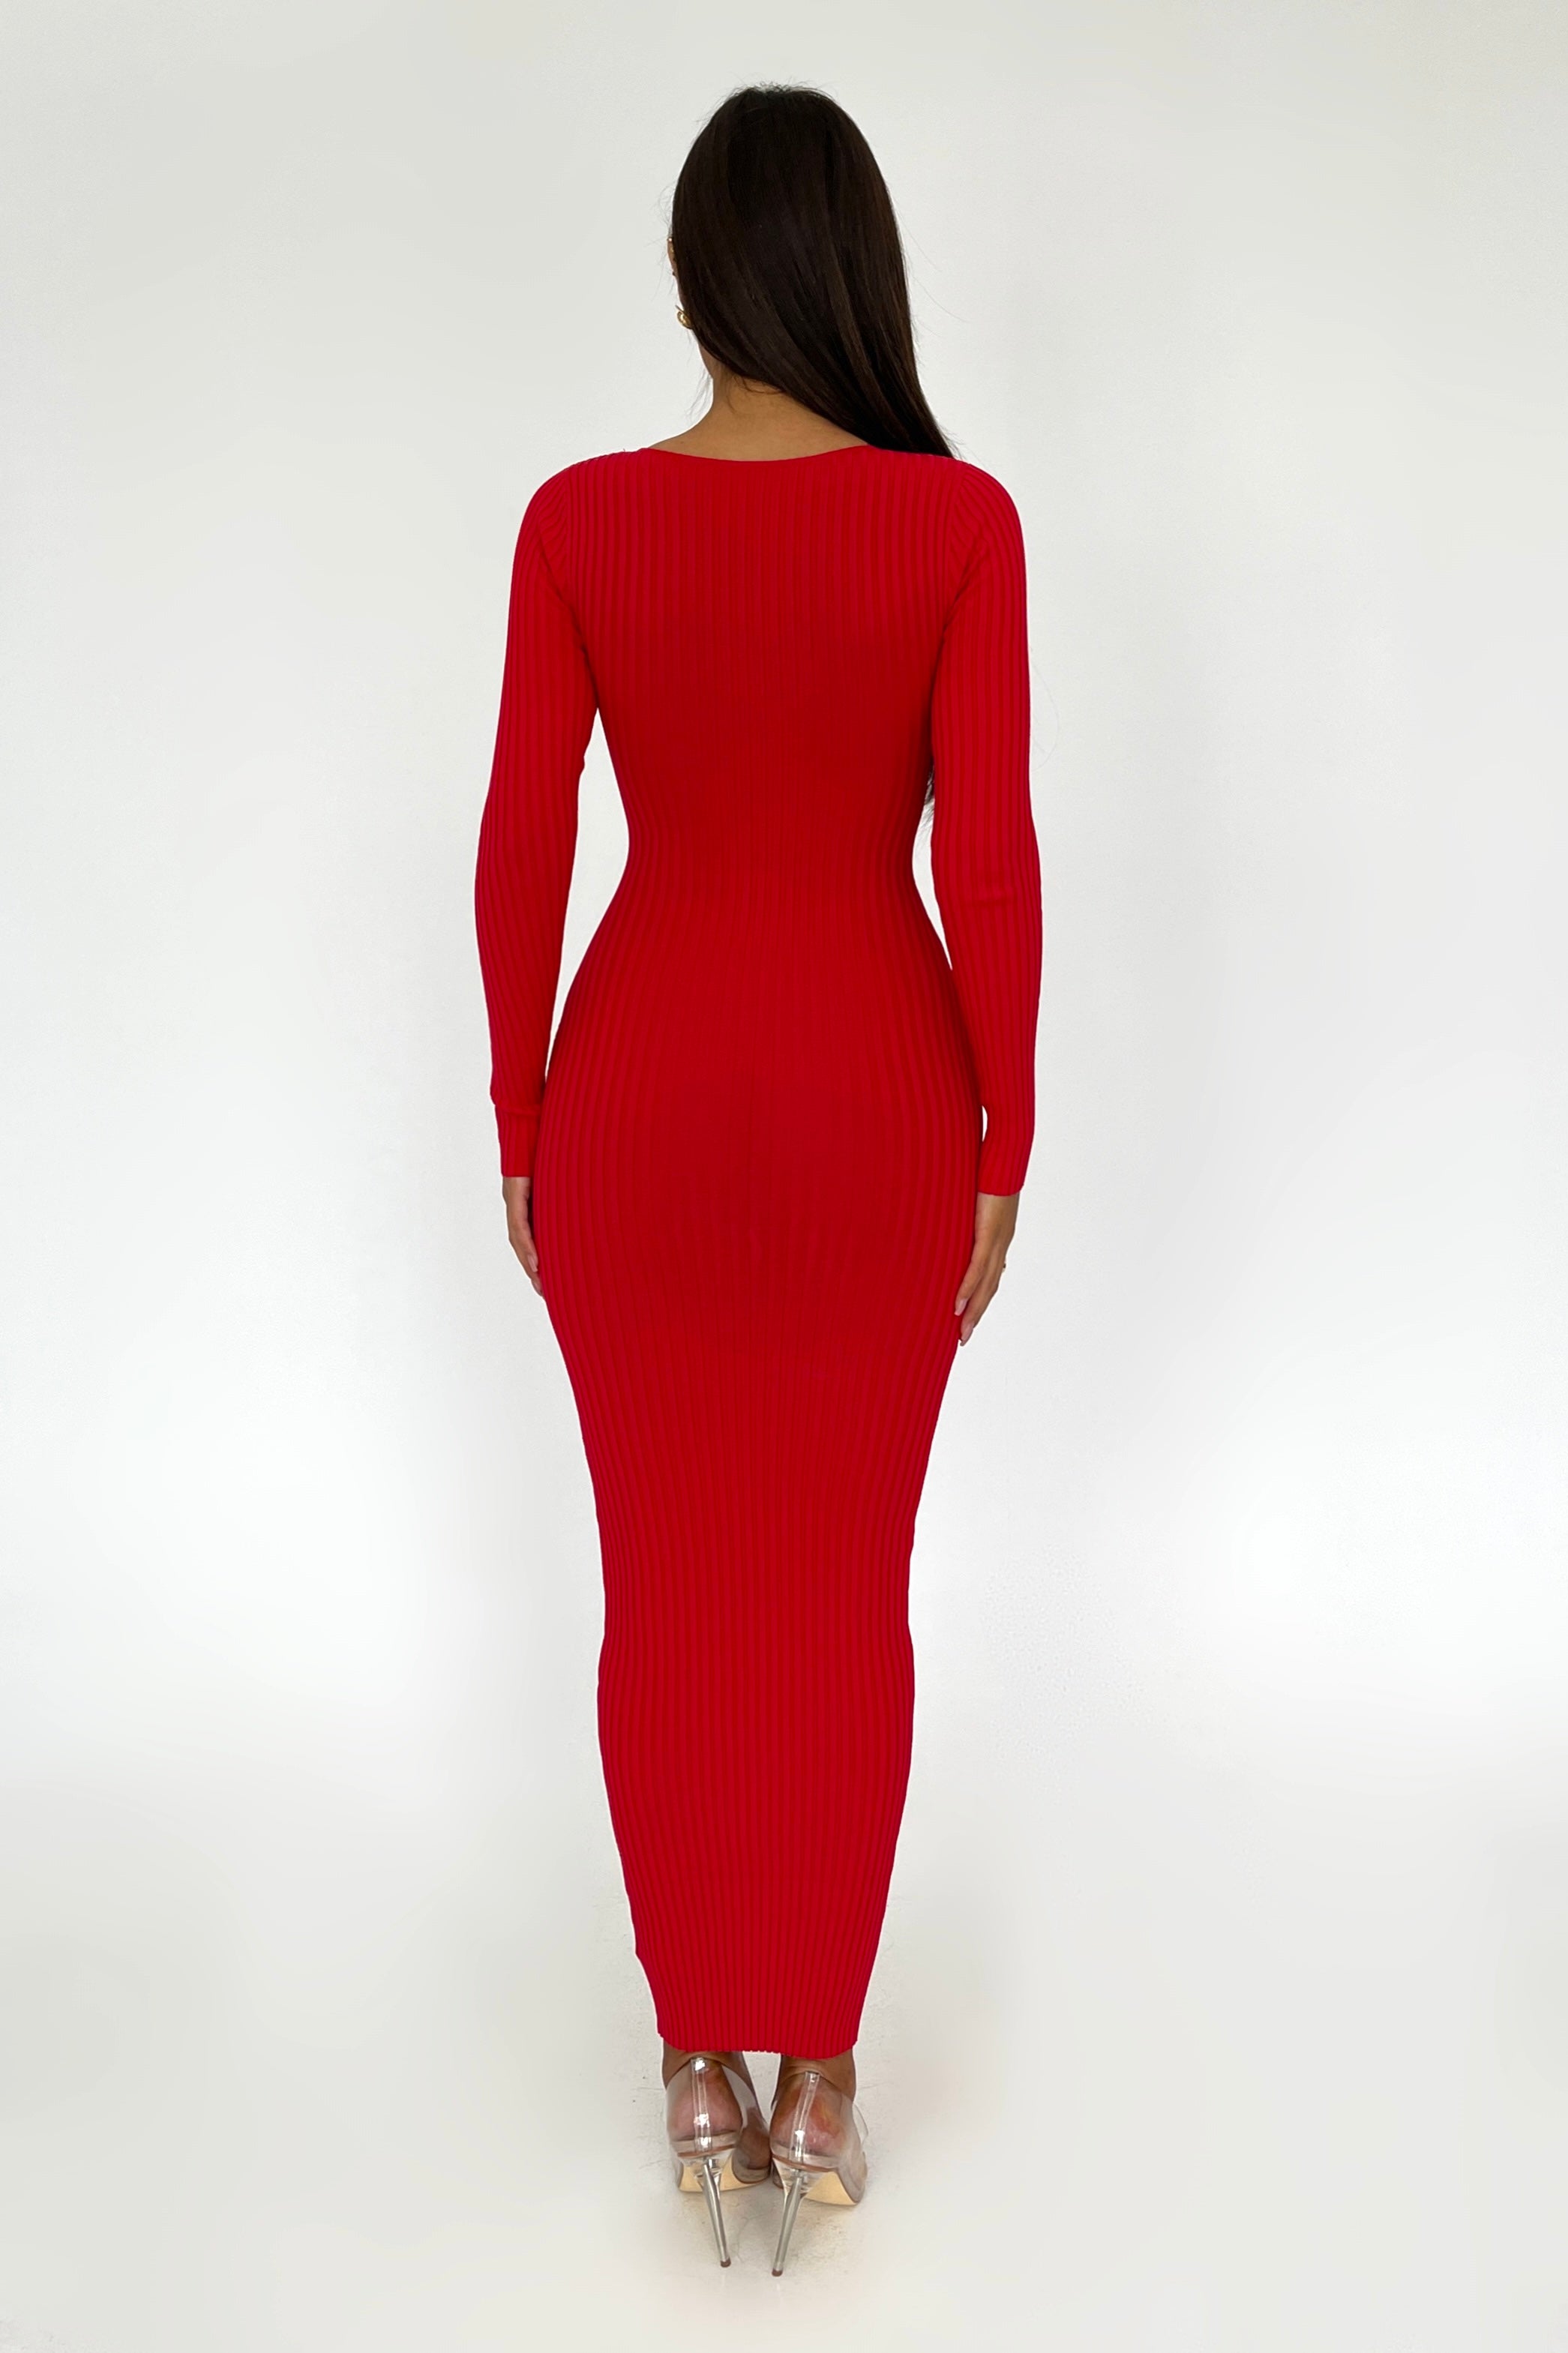 Alea Red Dress